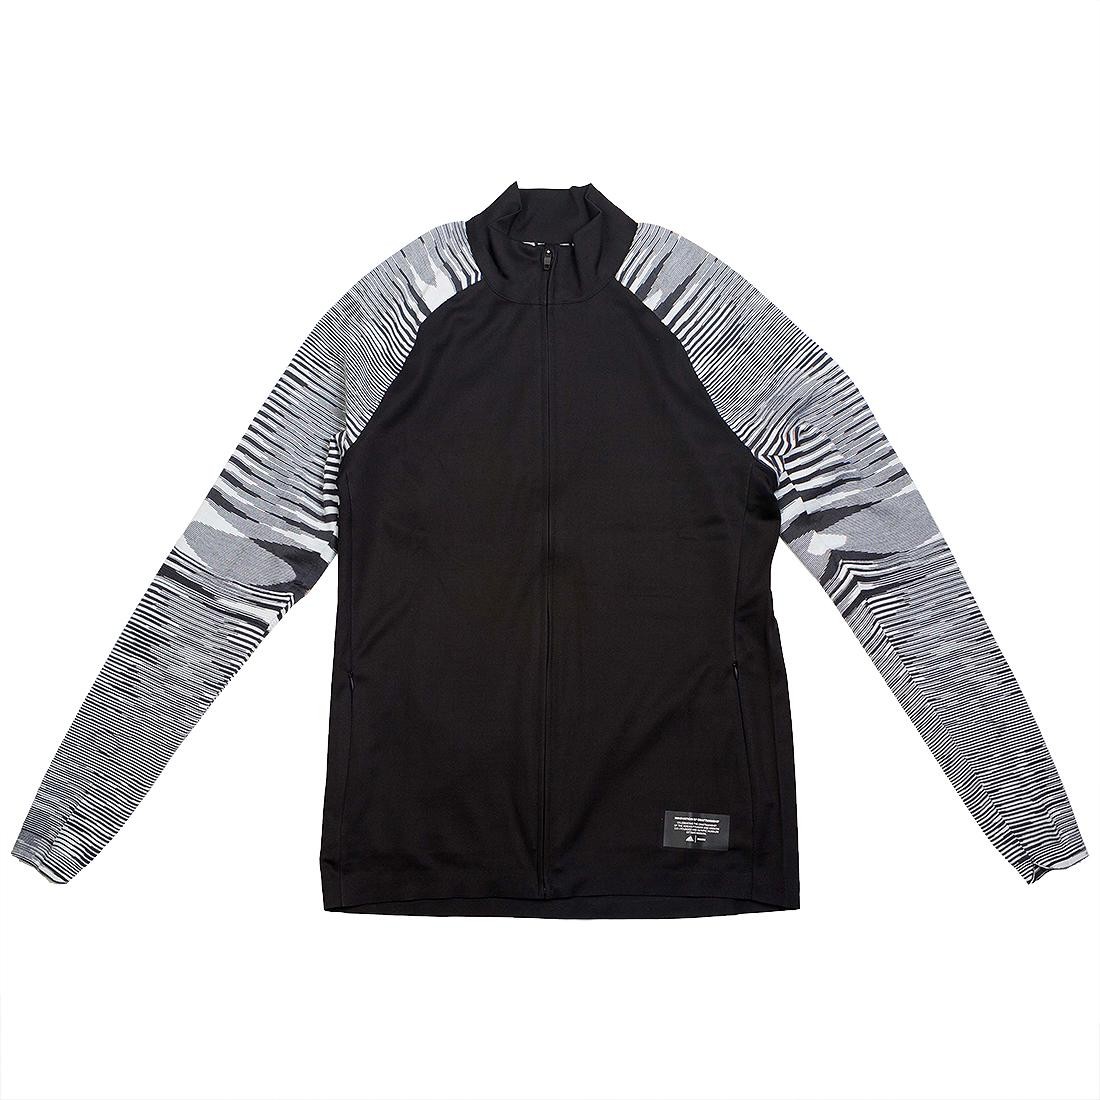 Adidas x Missoni Men PHX Jacket (black / dark grey / white)